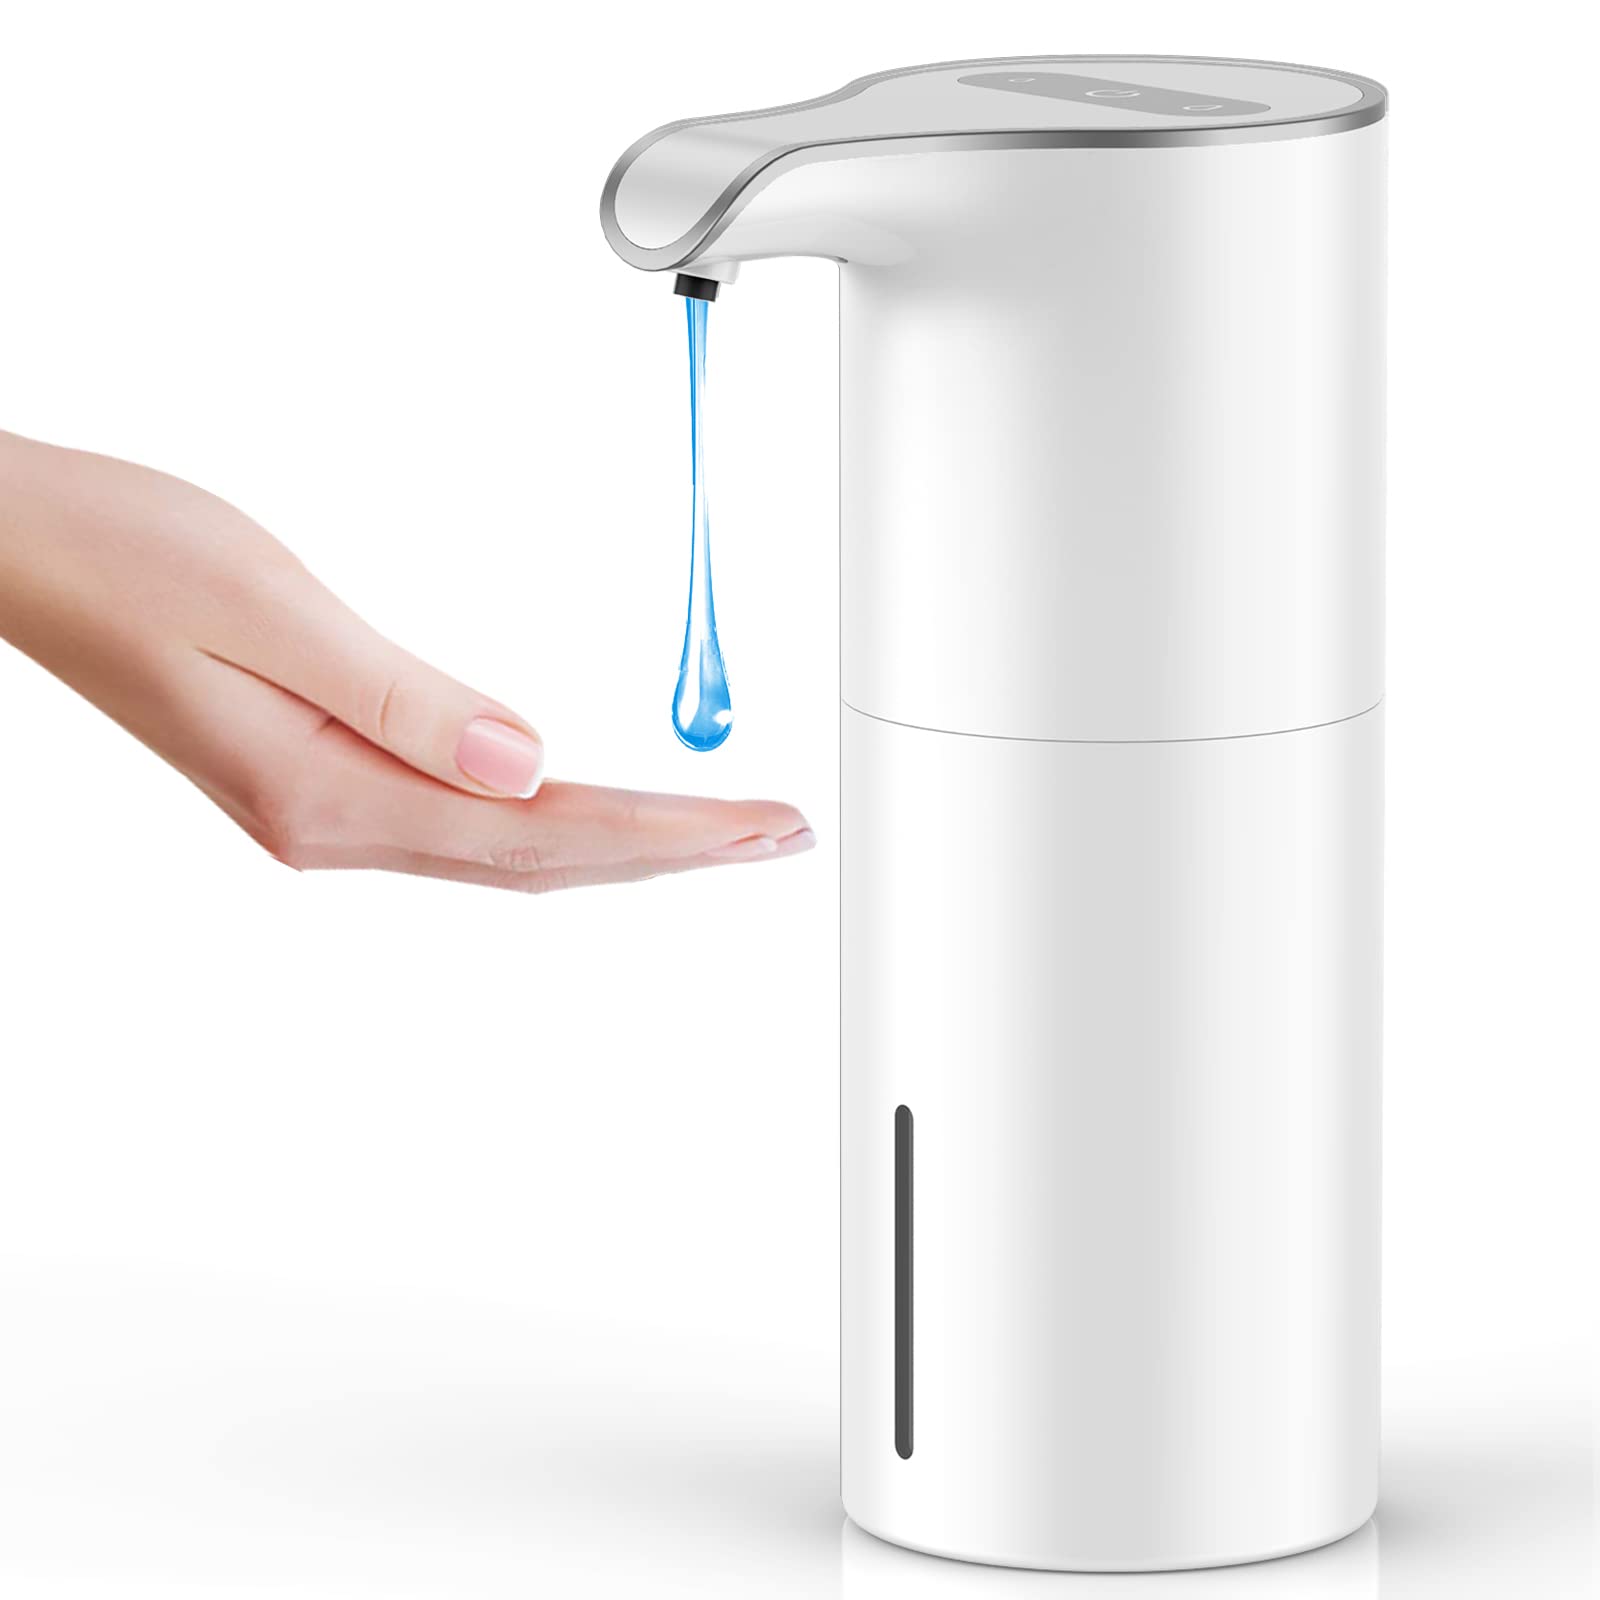 Yikhom Automatic Liquid Soap Dispenser, 1537 Oz450Ml Soap Dispenser, Touchless Hand Sanitizer Dispenser Electric, Motion Sensor